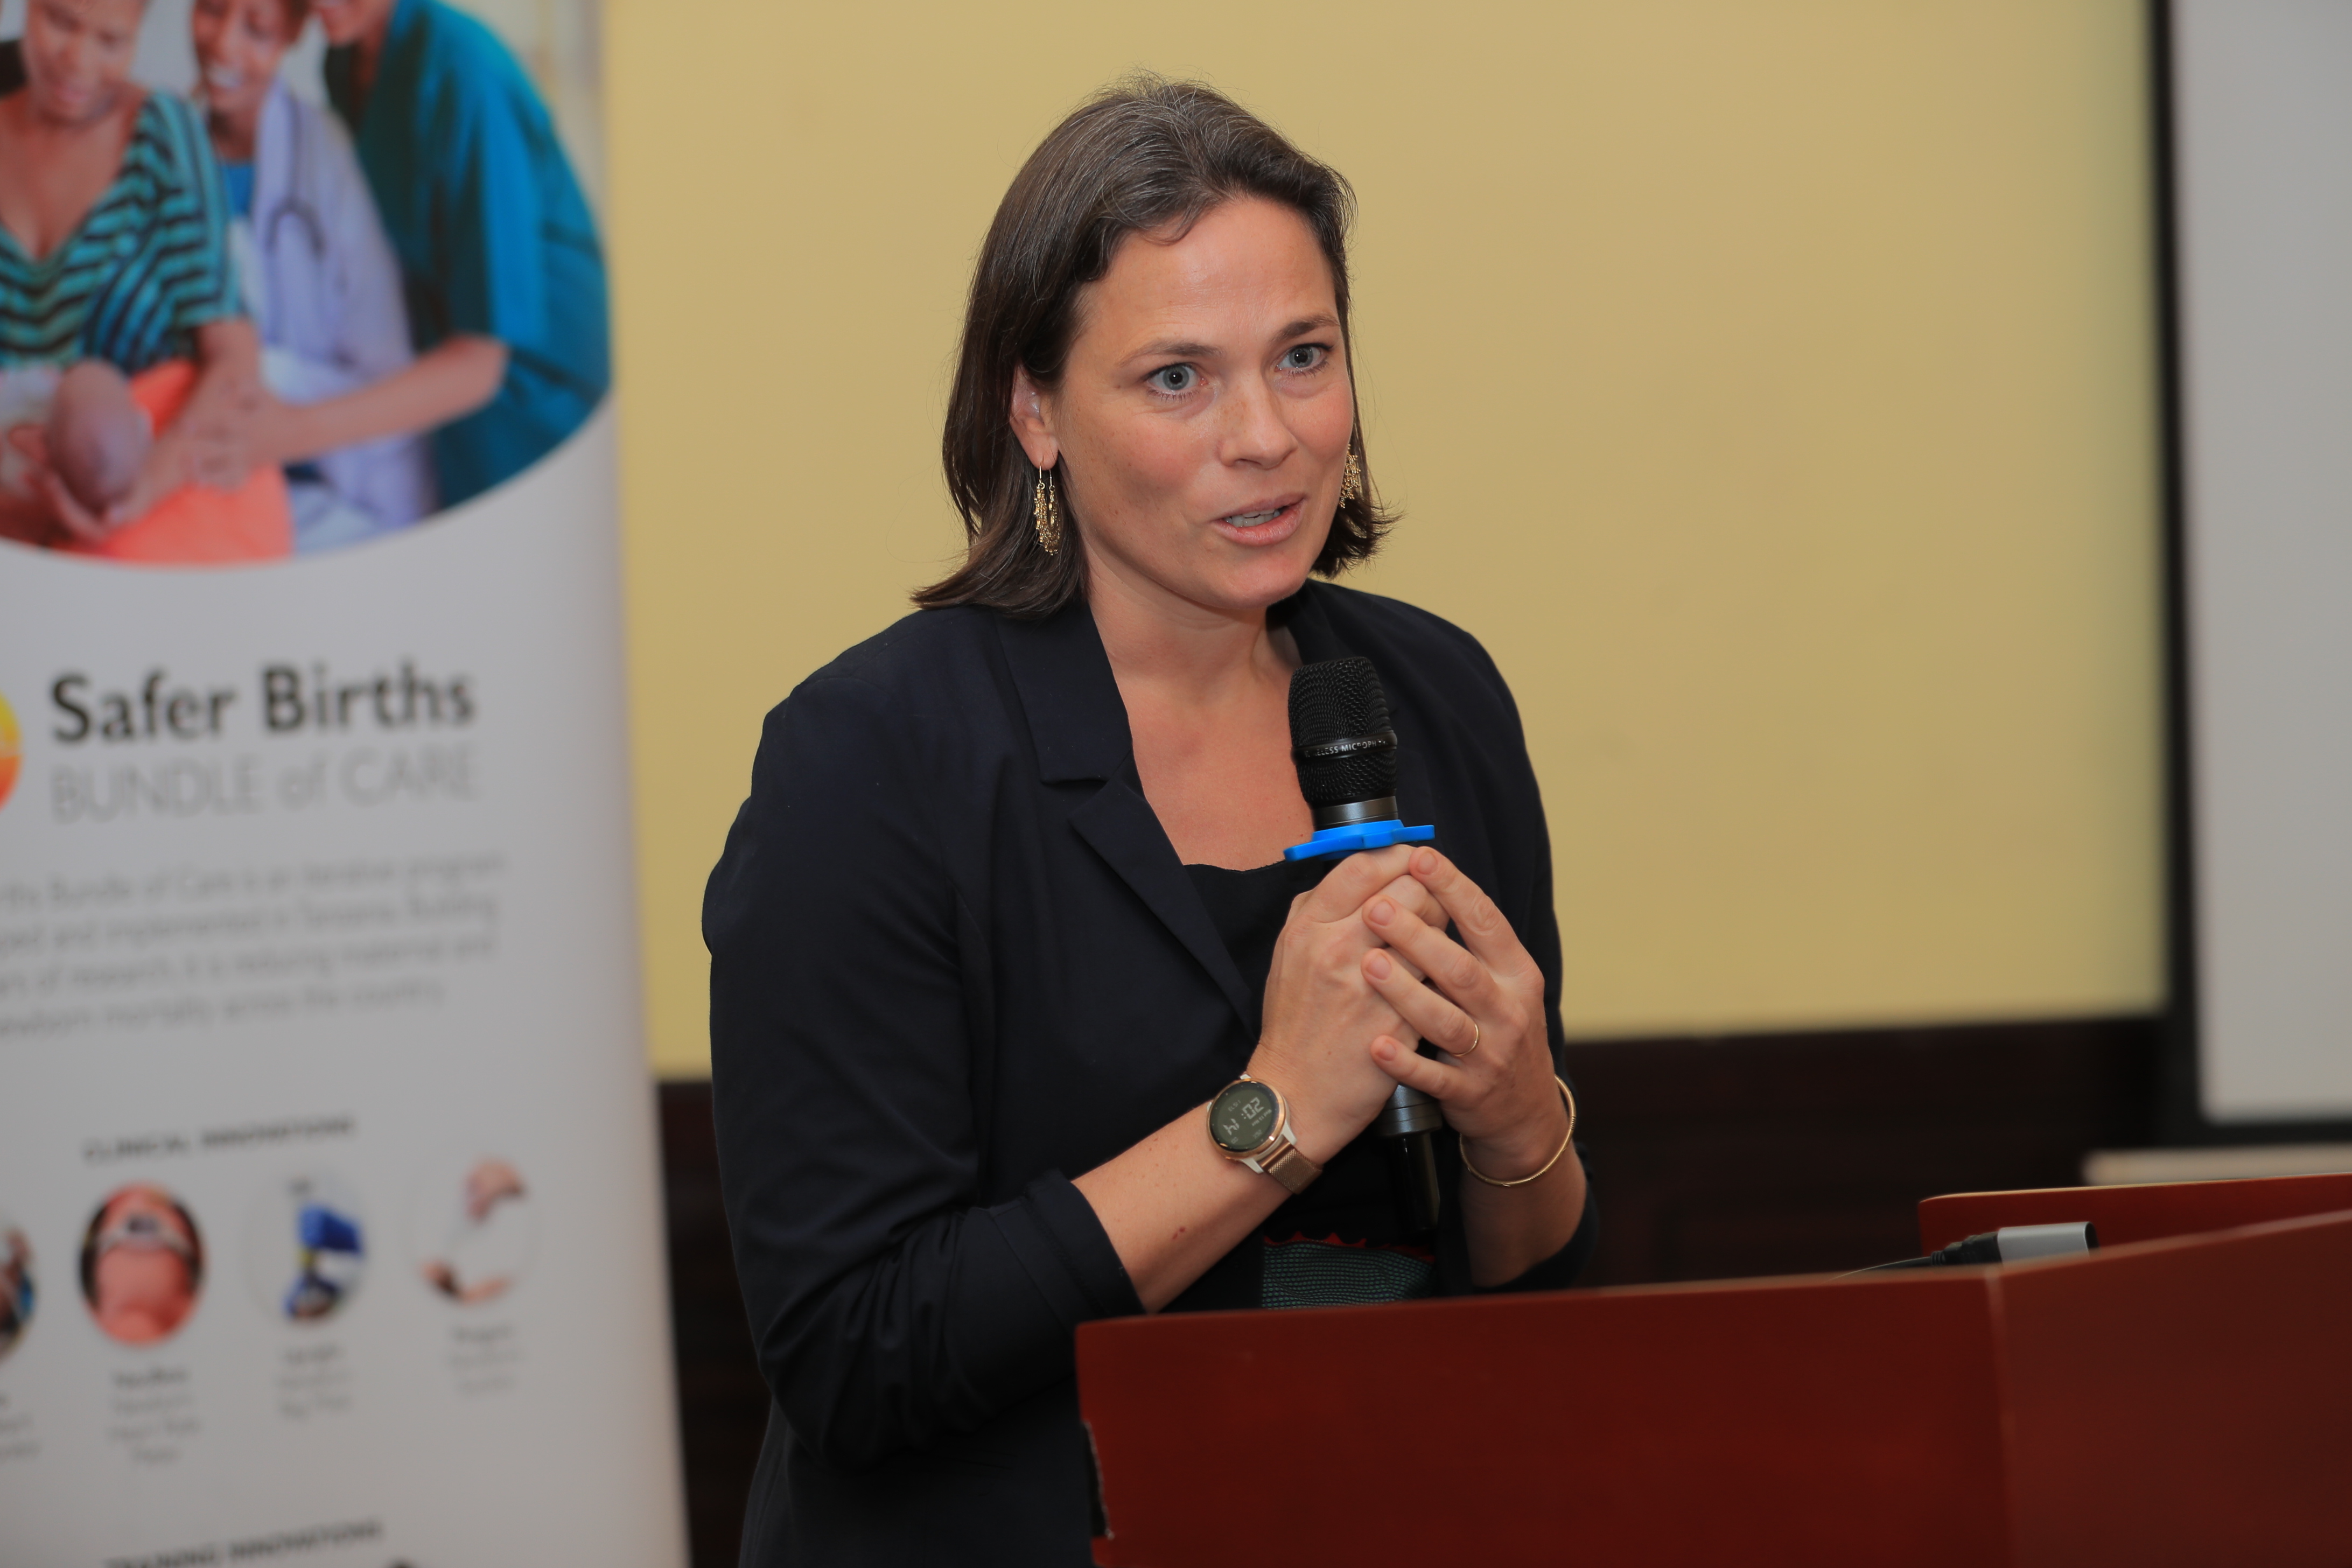 Karoline Linde, CEO of Laerdal Global Health,